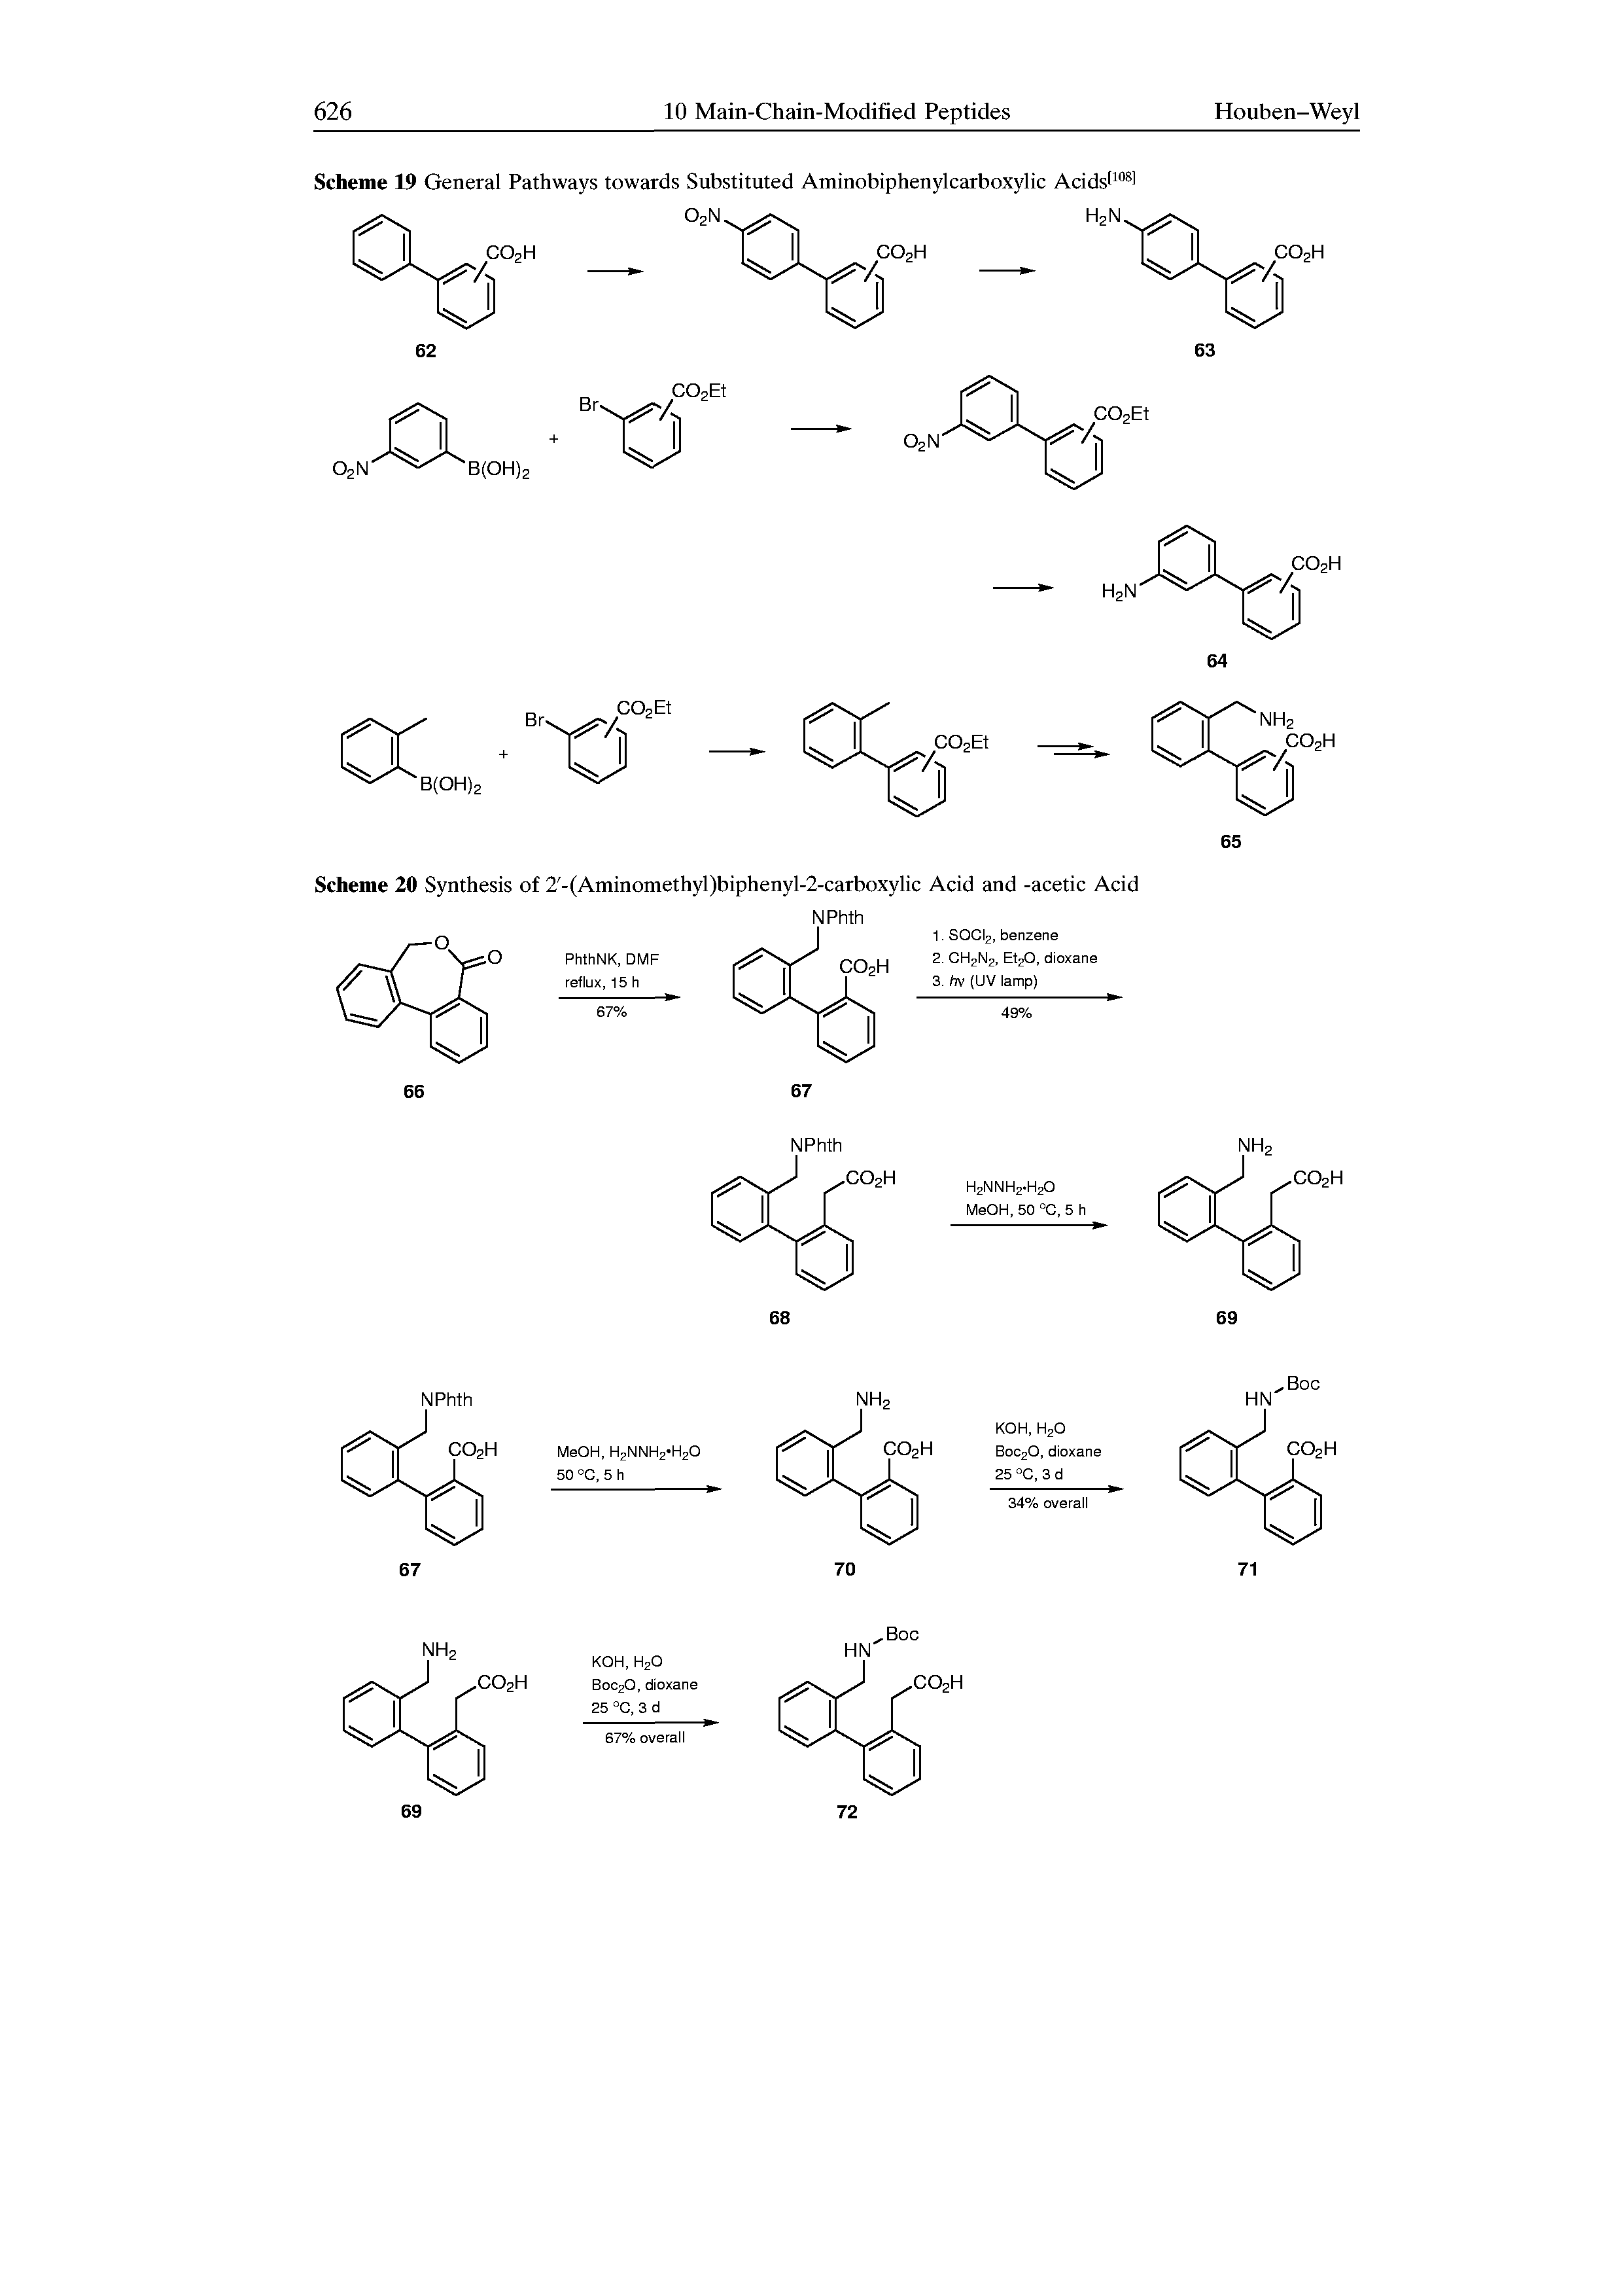 Scheme 20 Synthesis of 2 -(Aminomethyl)biphenyl-2-carboxylic Acid and -acetic Acid...